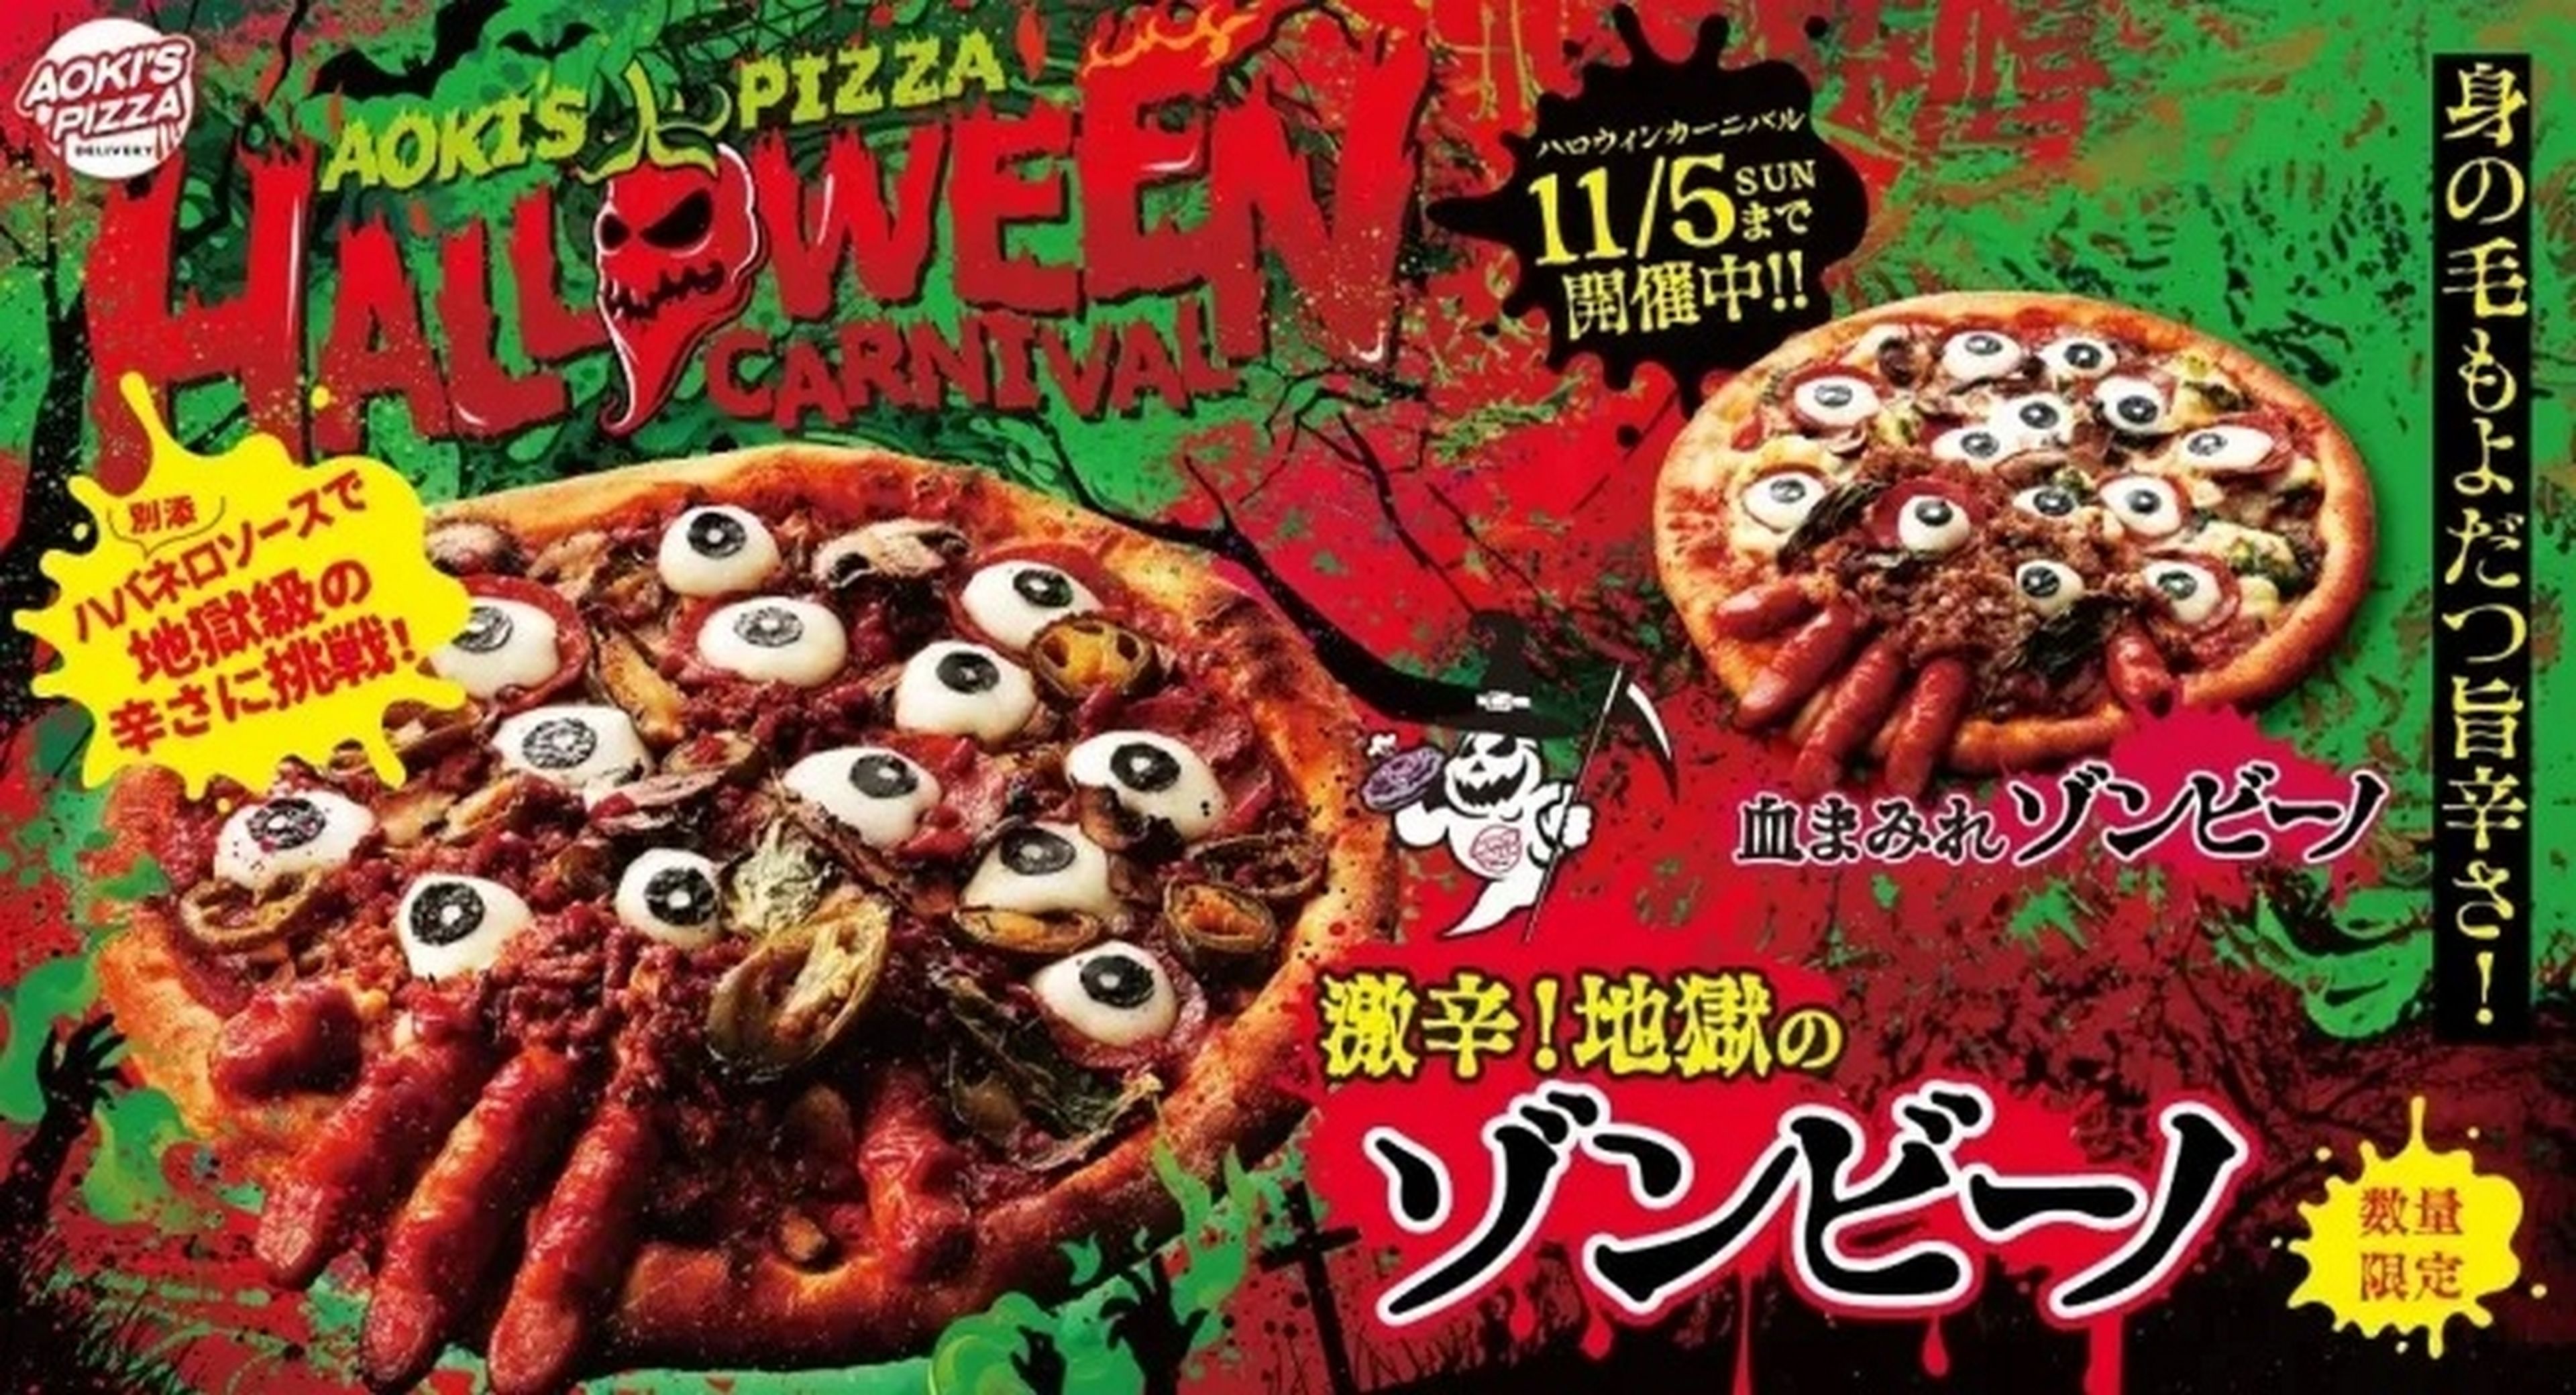 Zombino of Hell, la pizza zombi para Halloween que es demasiado asquerosa para comérsela